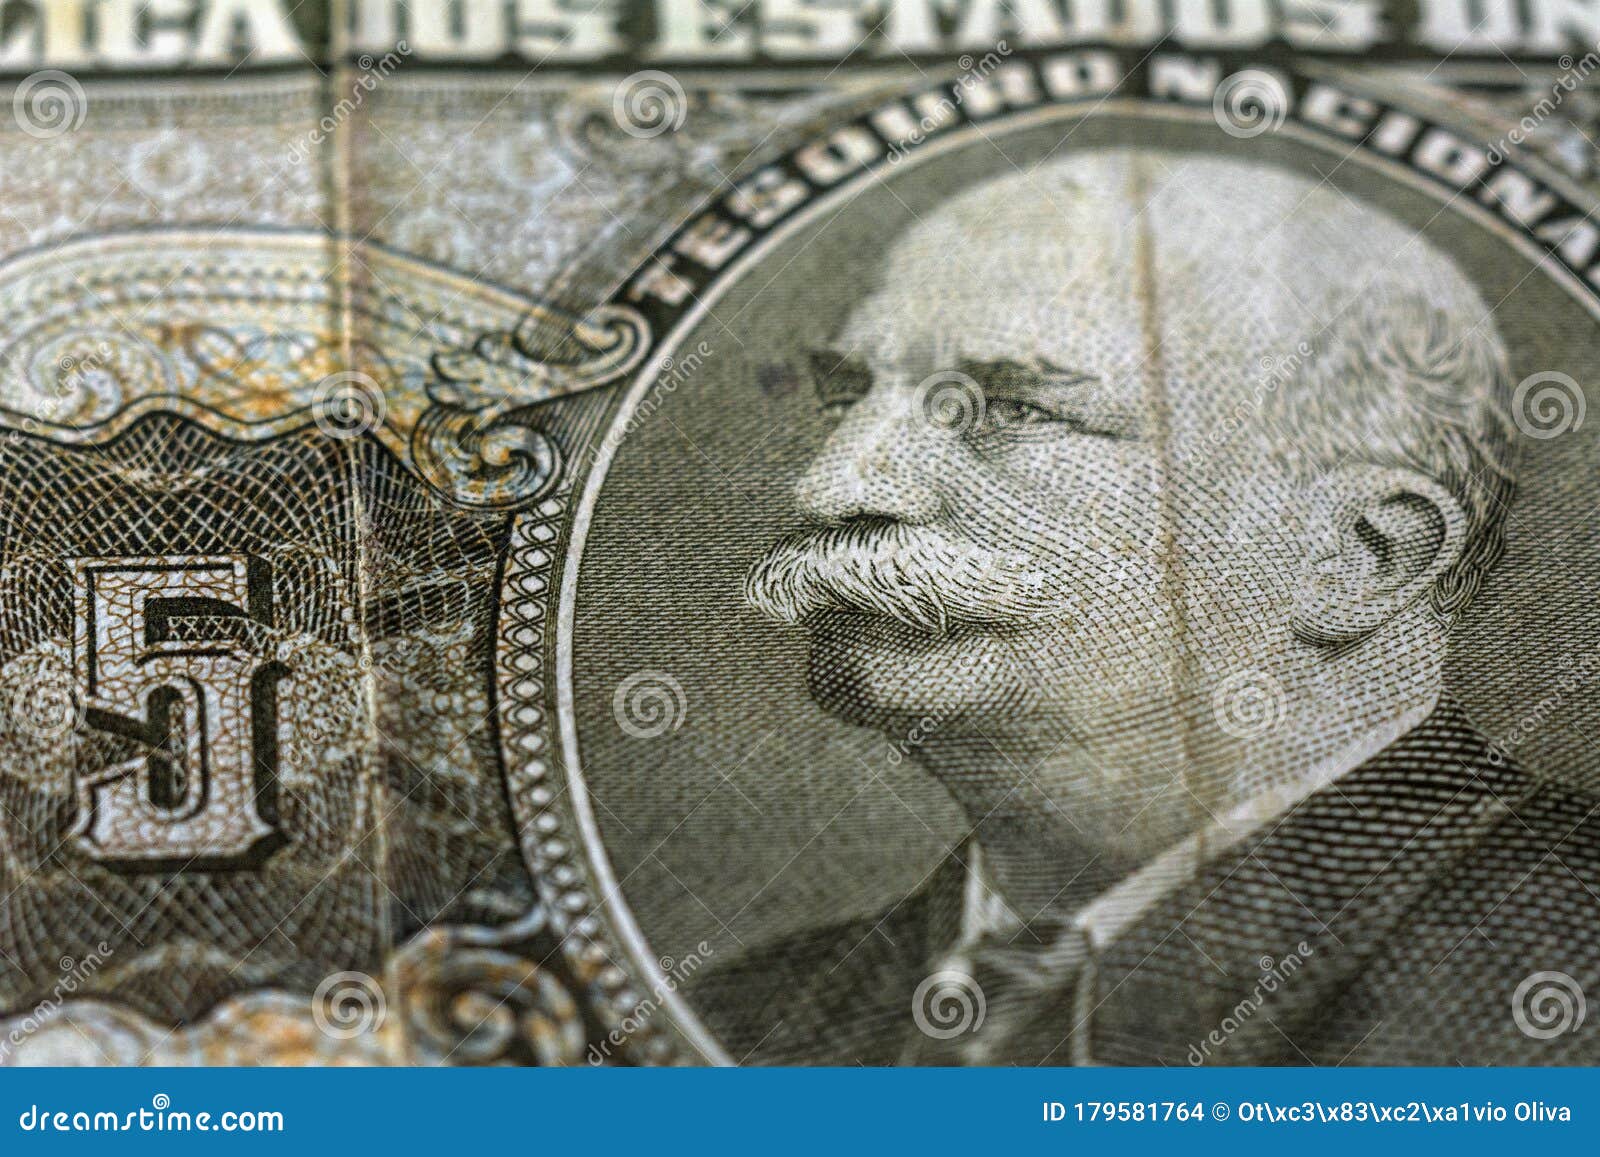 bills of the old brazilian currency cruzeiro